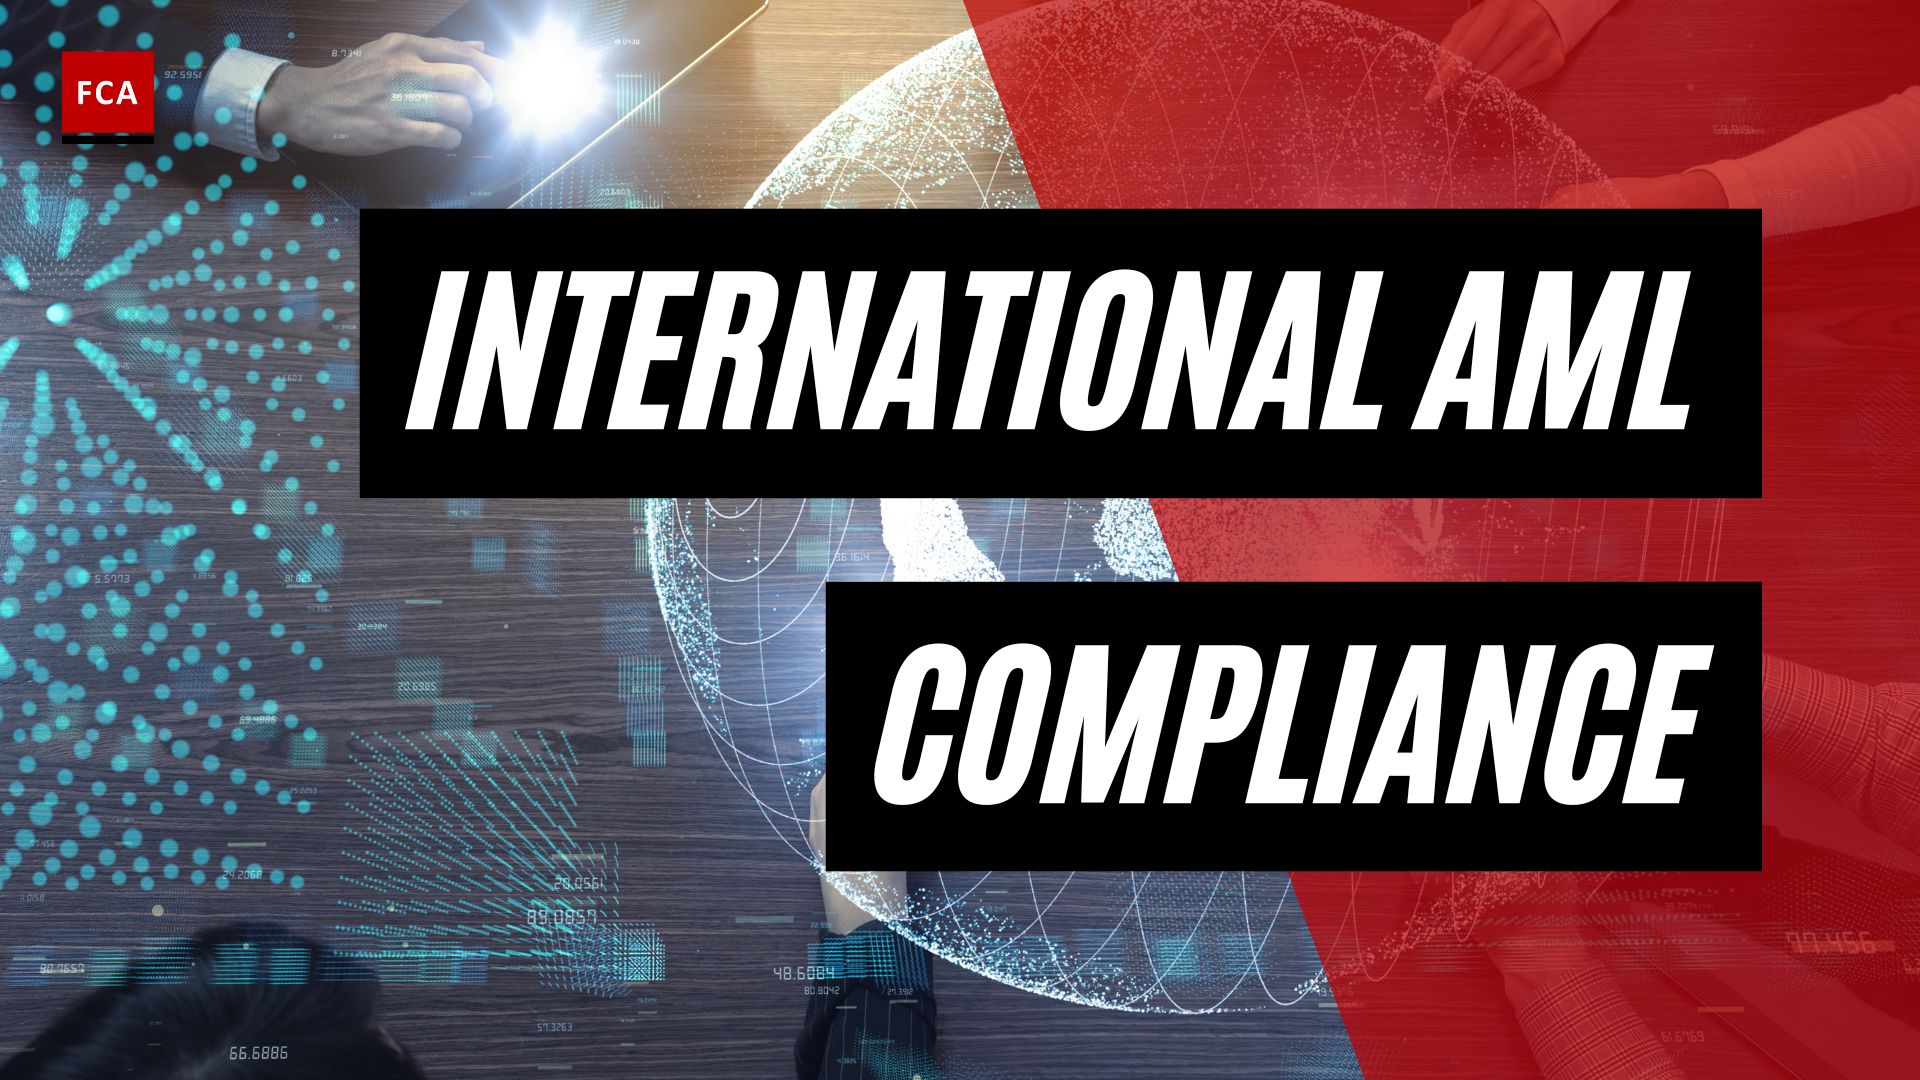 Ensuring Global Integrity: International Aml Compliance Explained